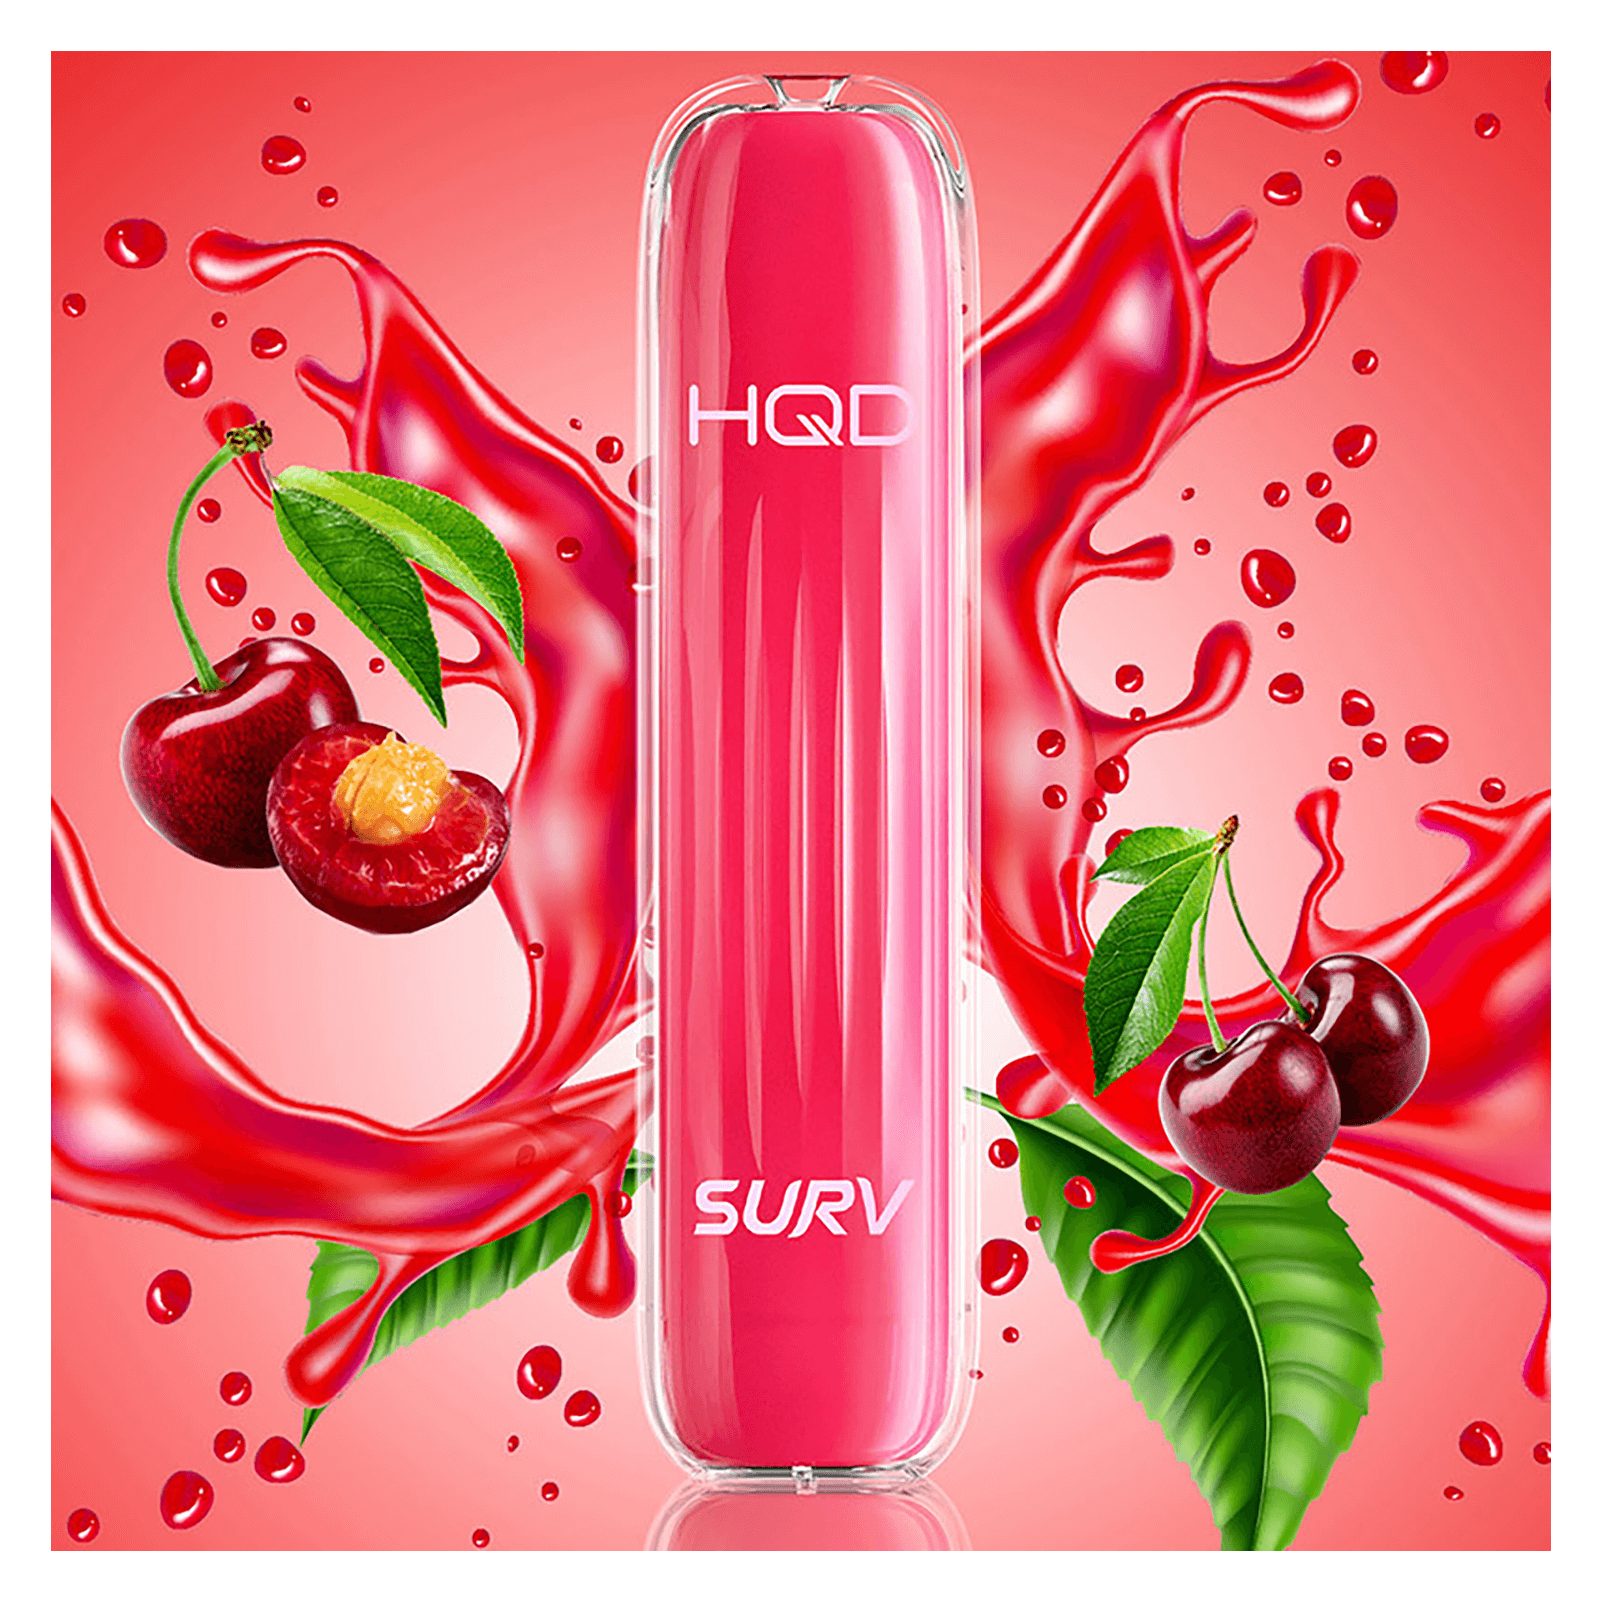 HQD Surv - Cherry